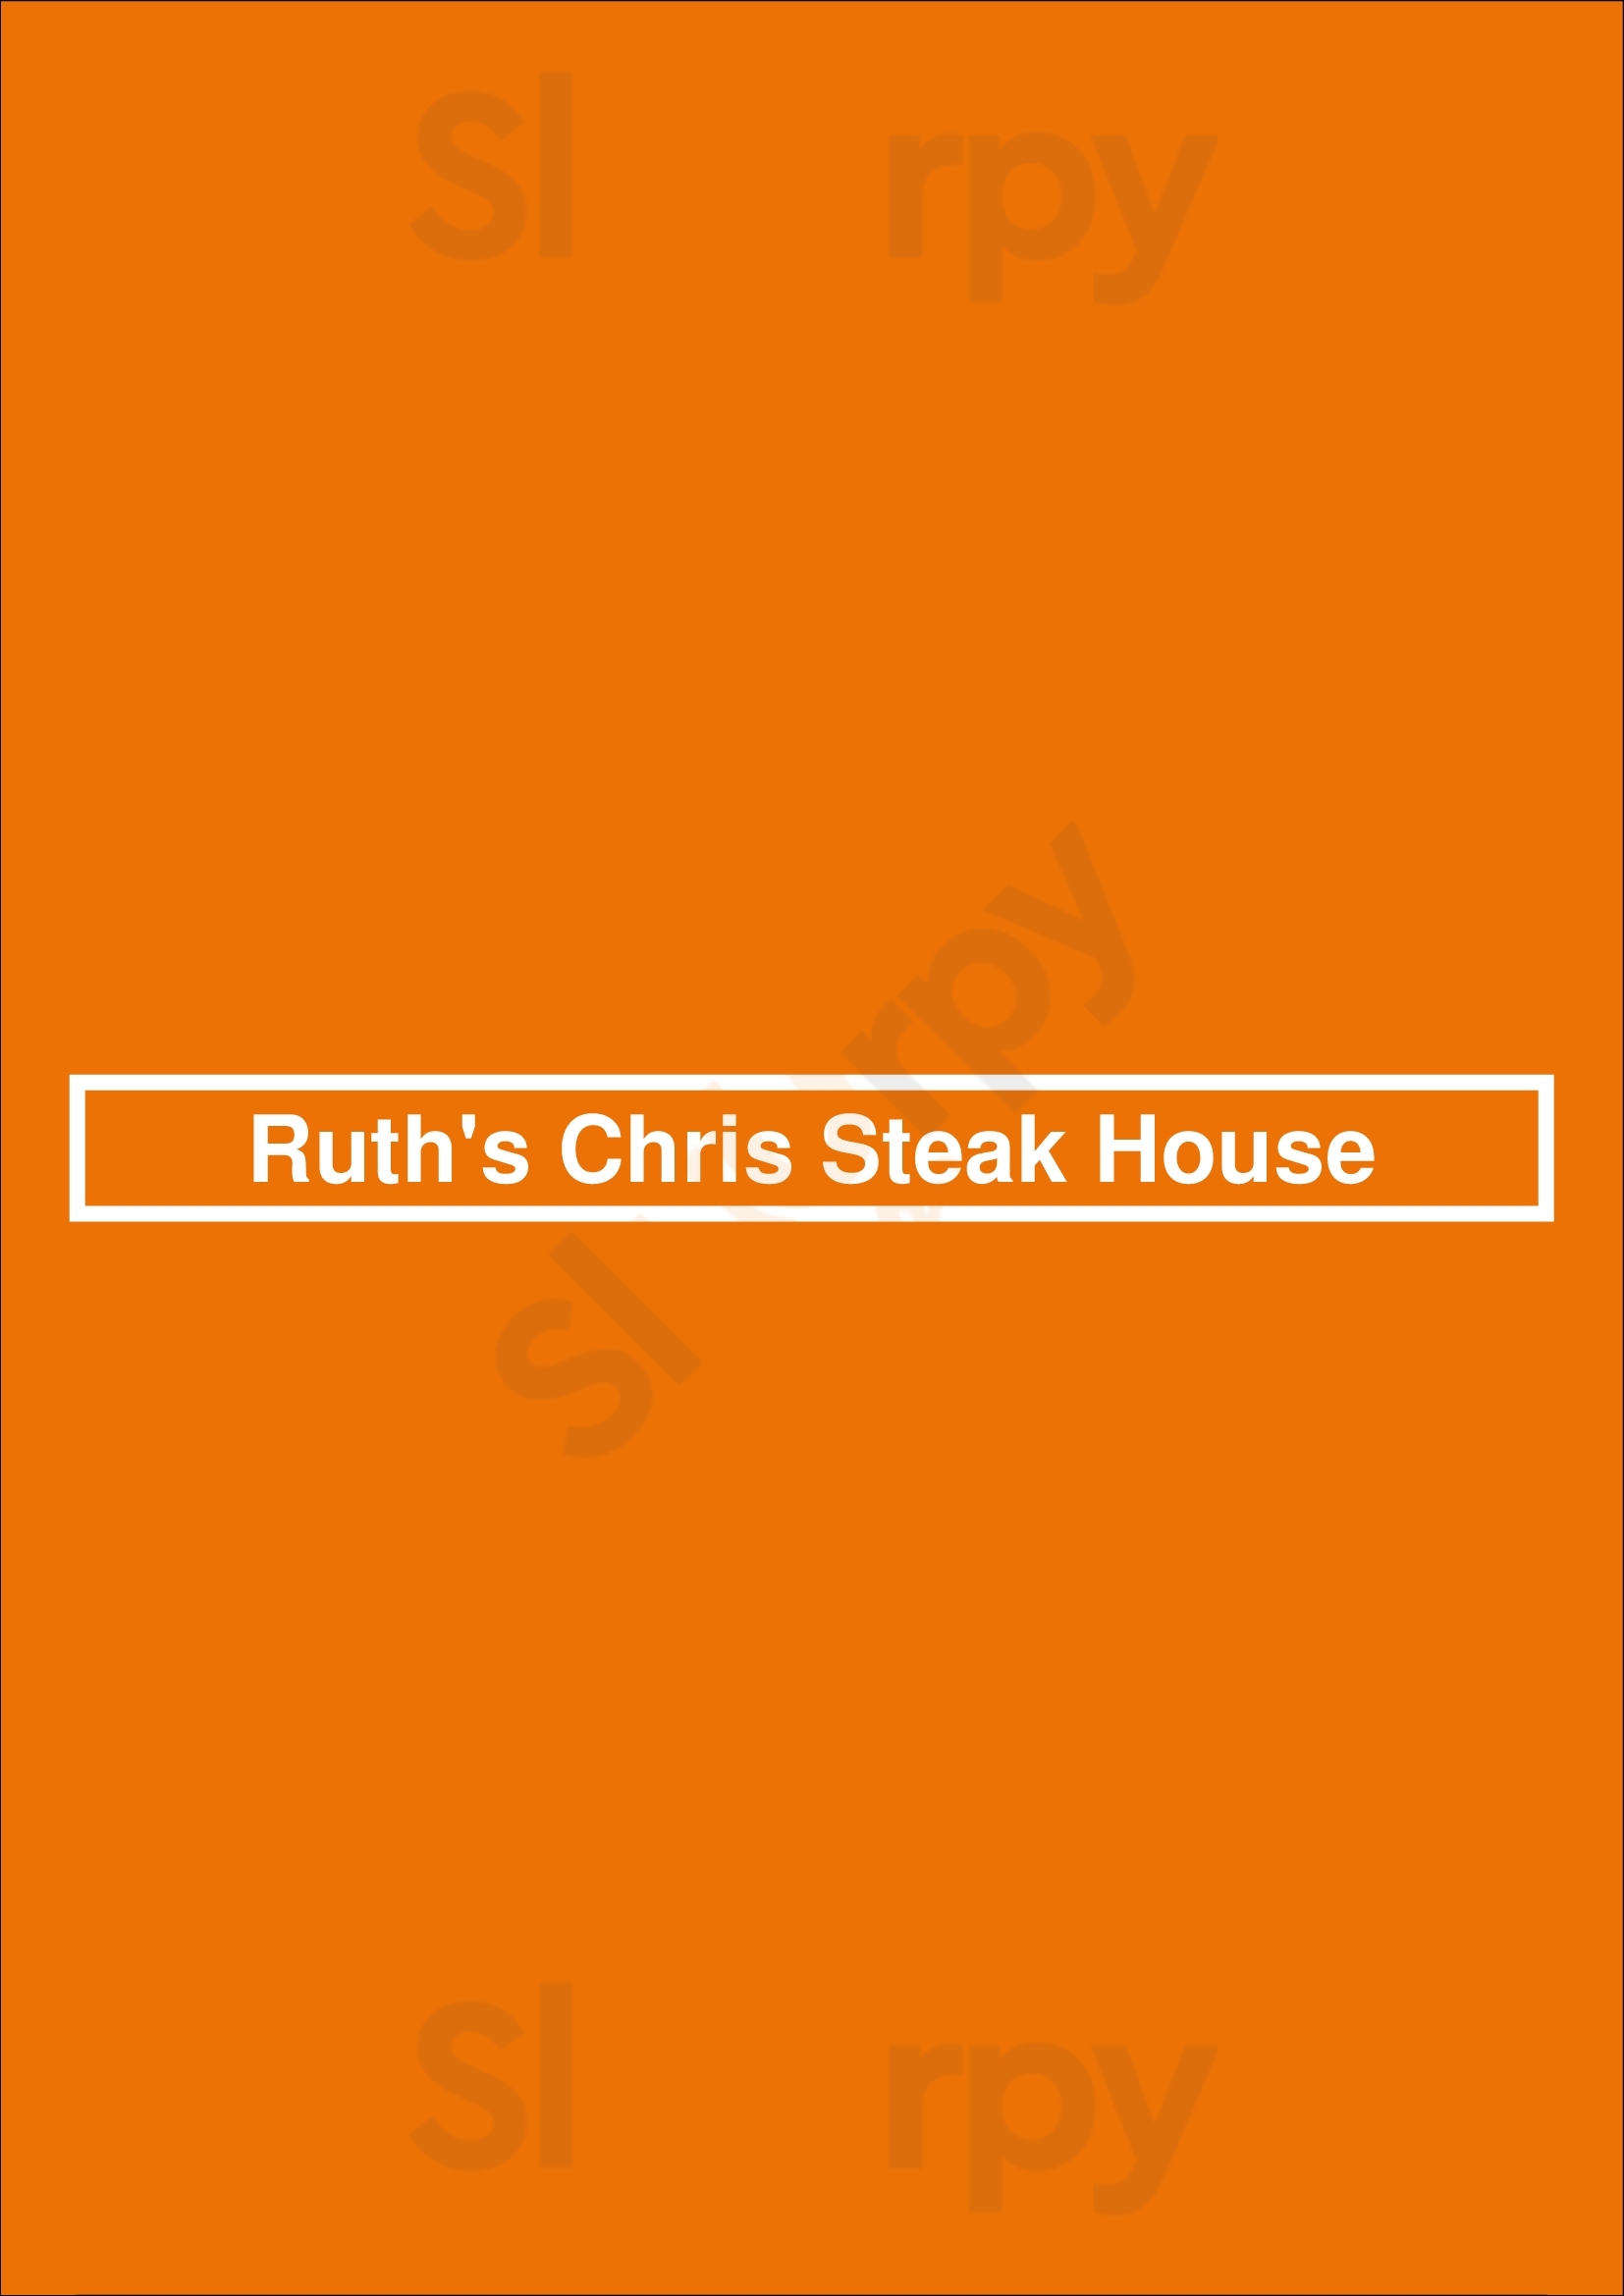 Ruth's Chris Steak House Minneapolis Menu - 1